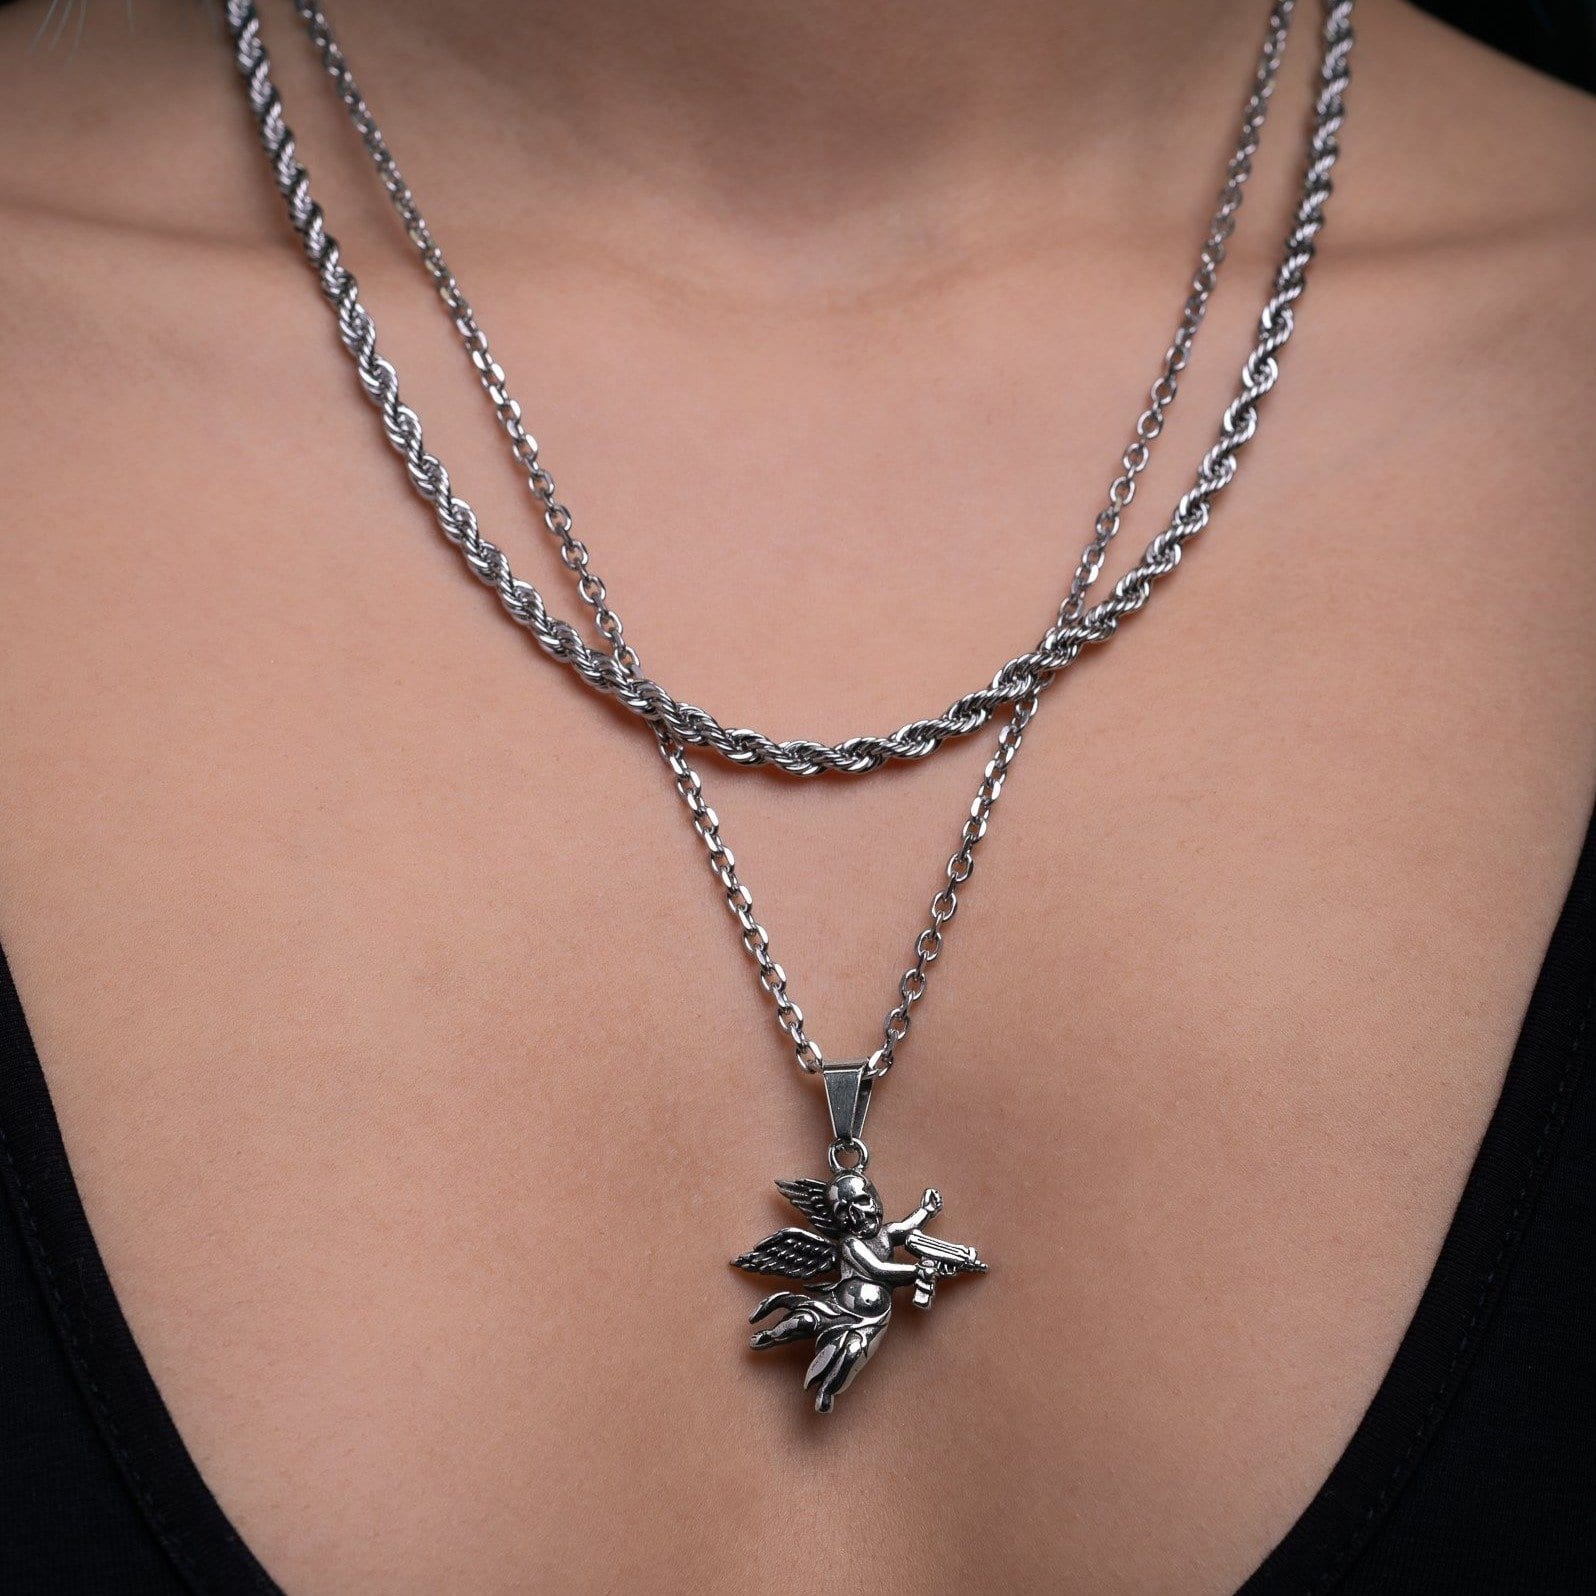 Death's Cupid Cherub Pendant Necklace Chain By Statement_05